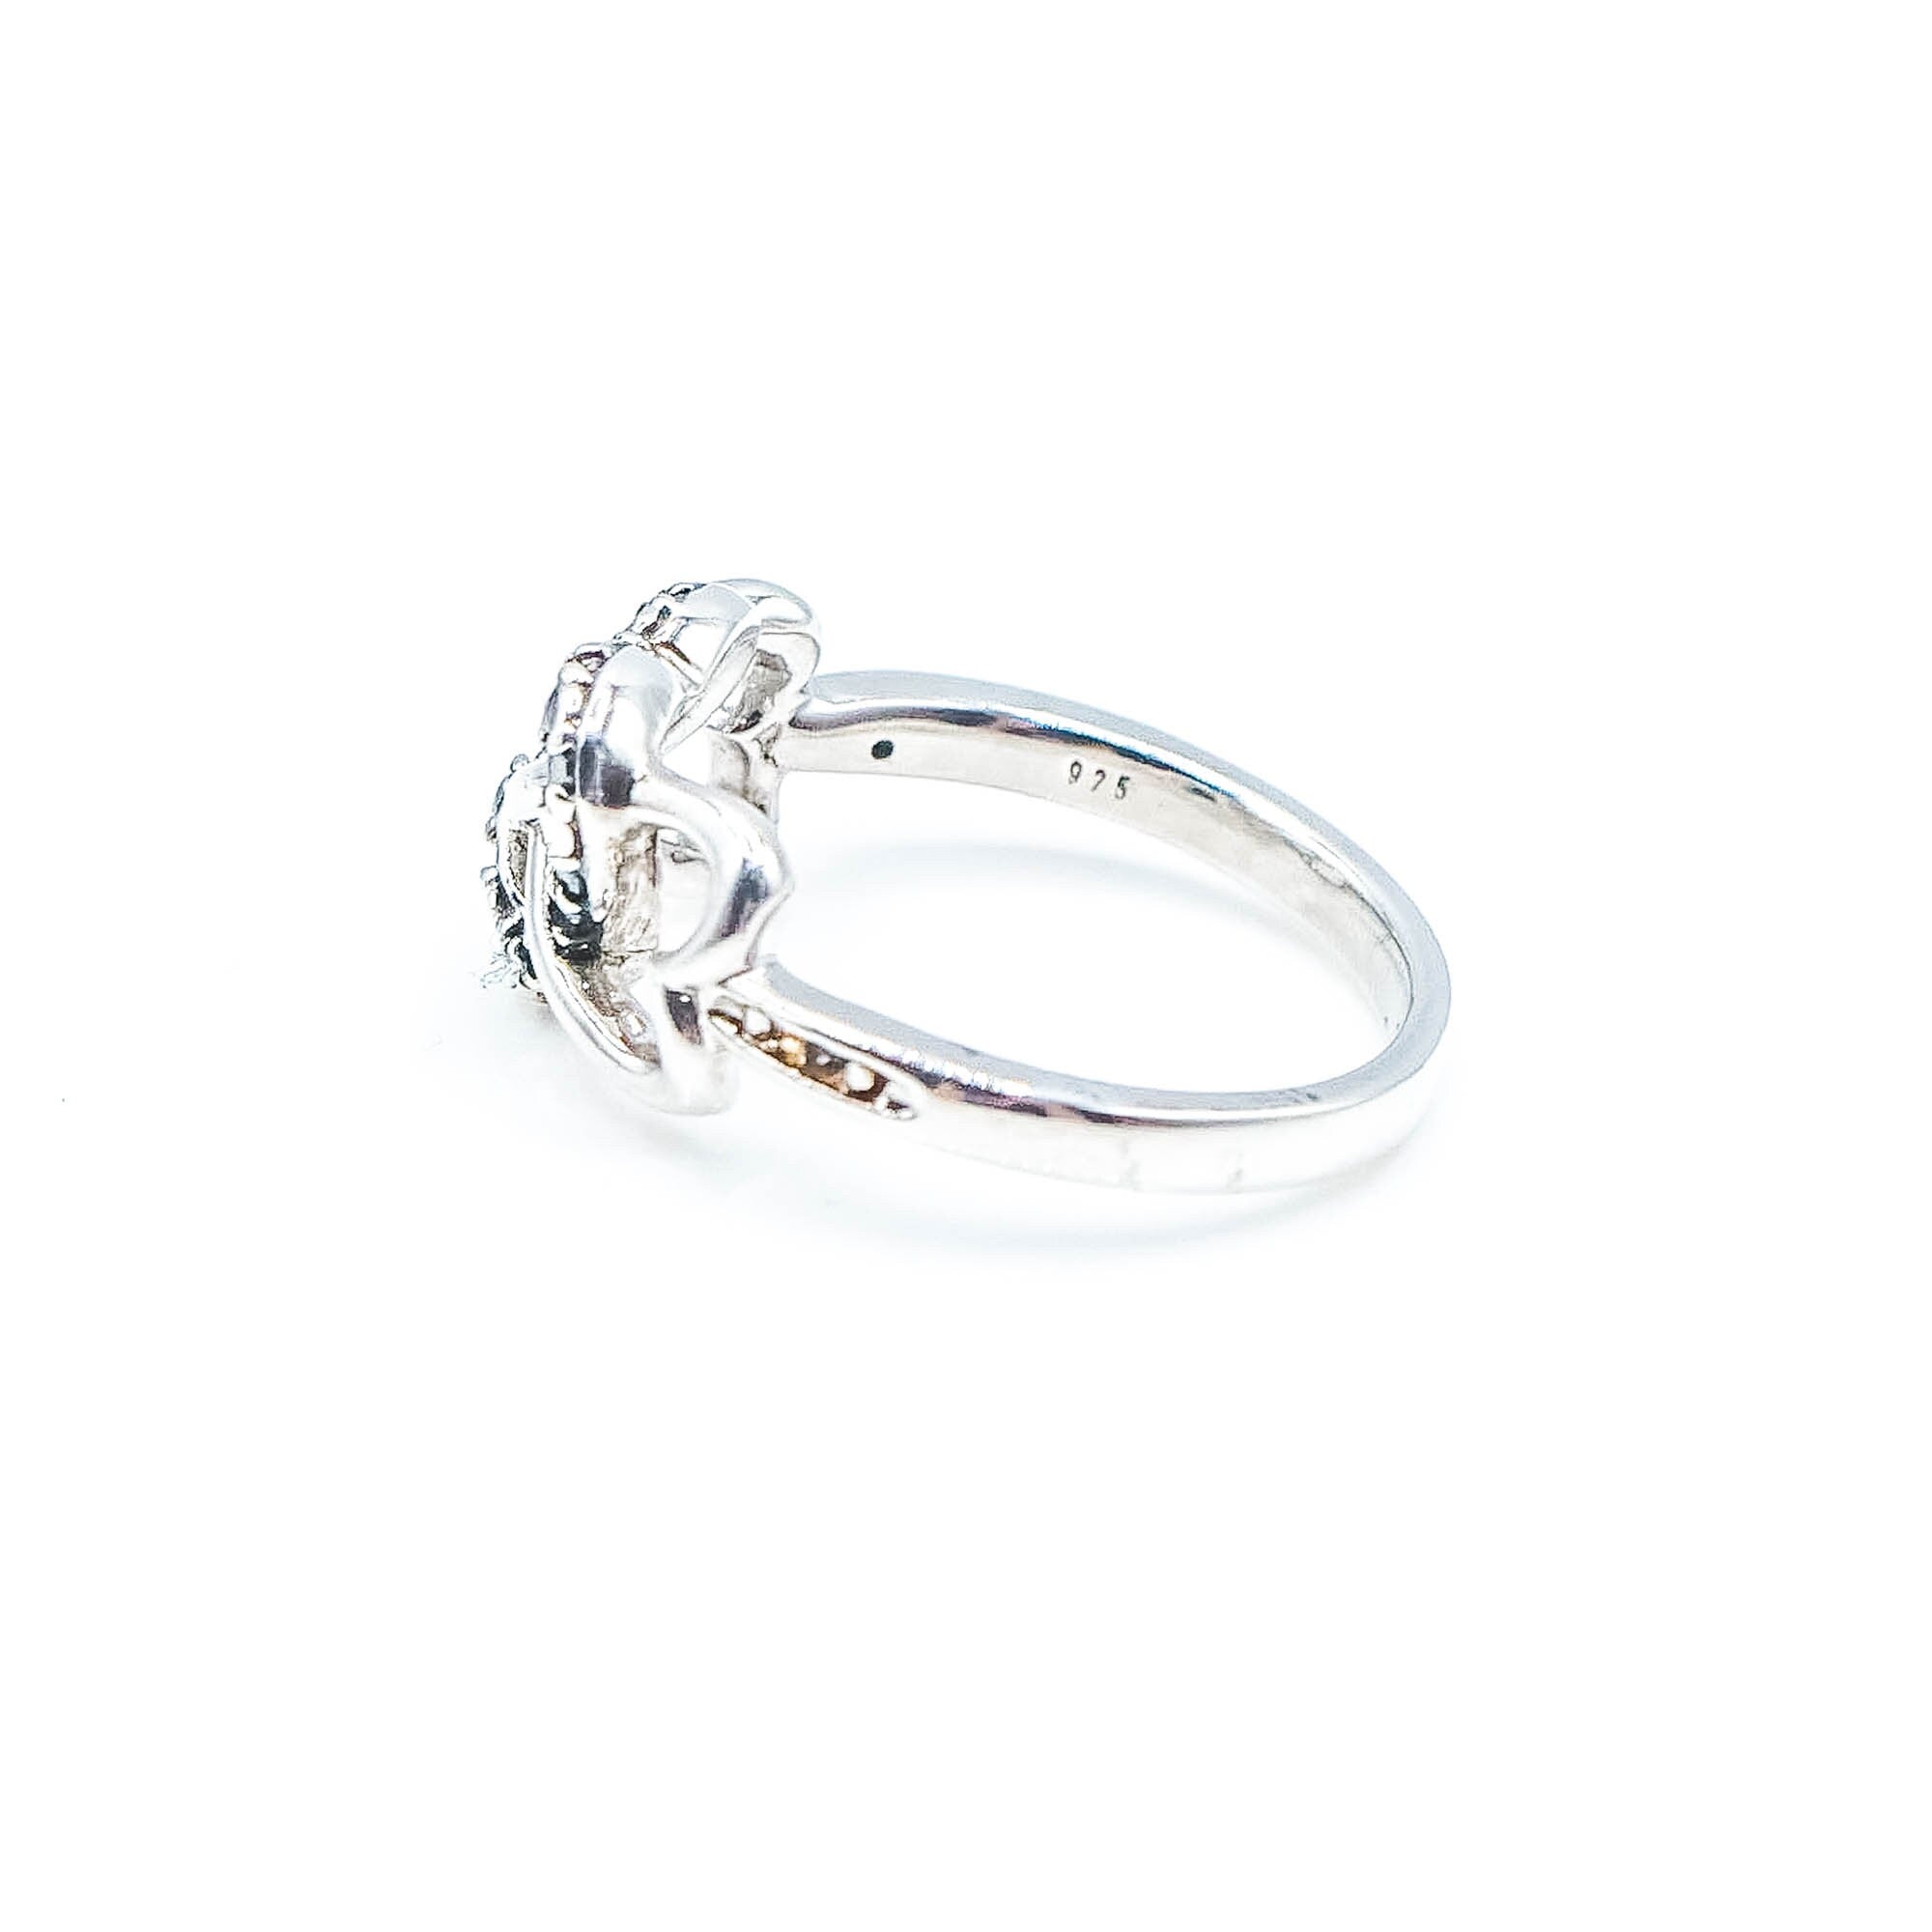 Vintage JWBR Diamond Hearts Sterling Silver Ring Size 6.75